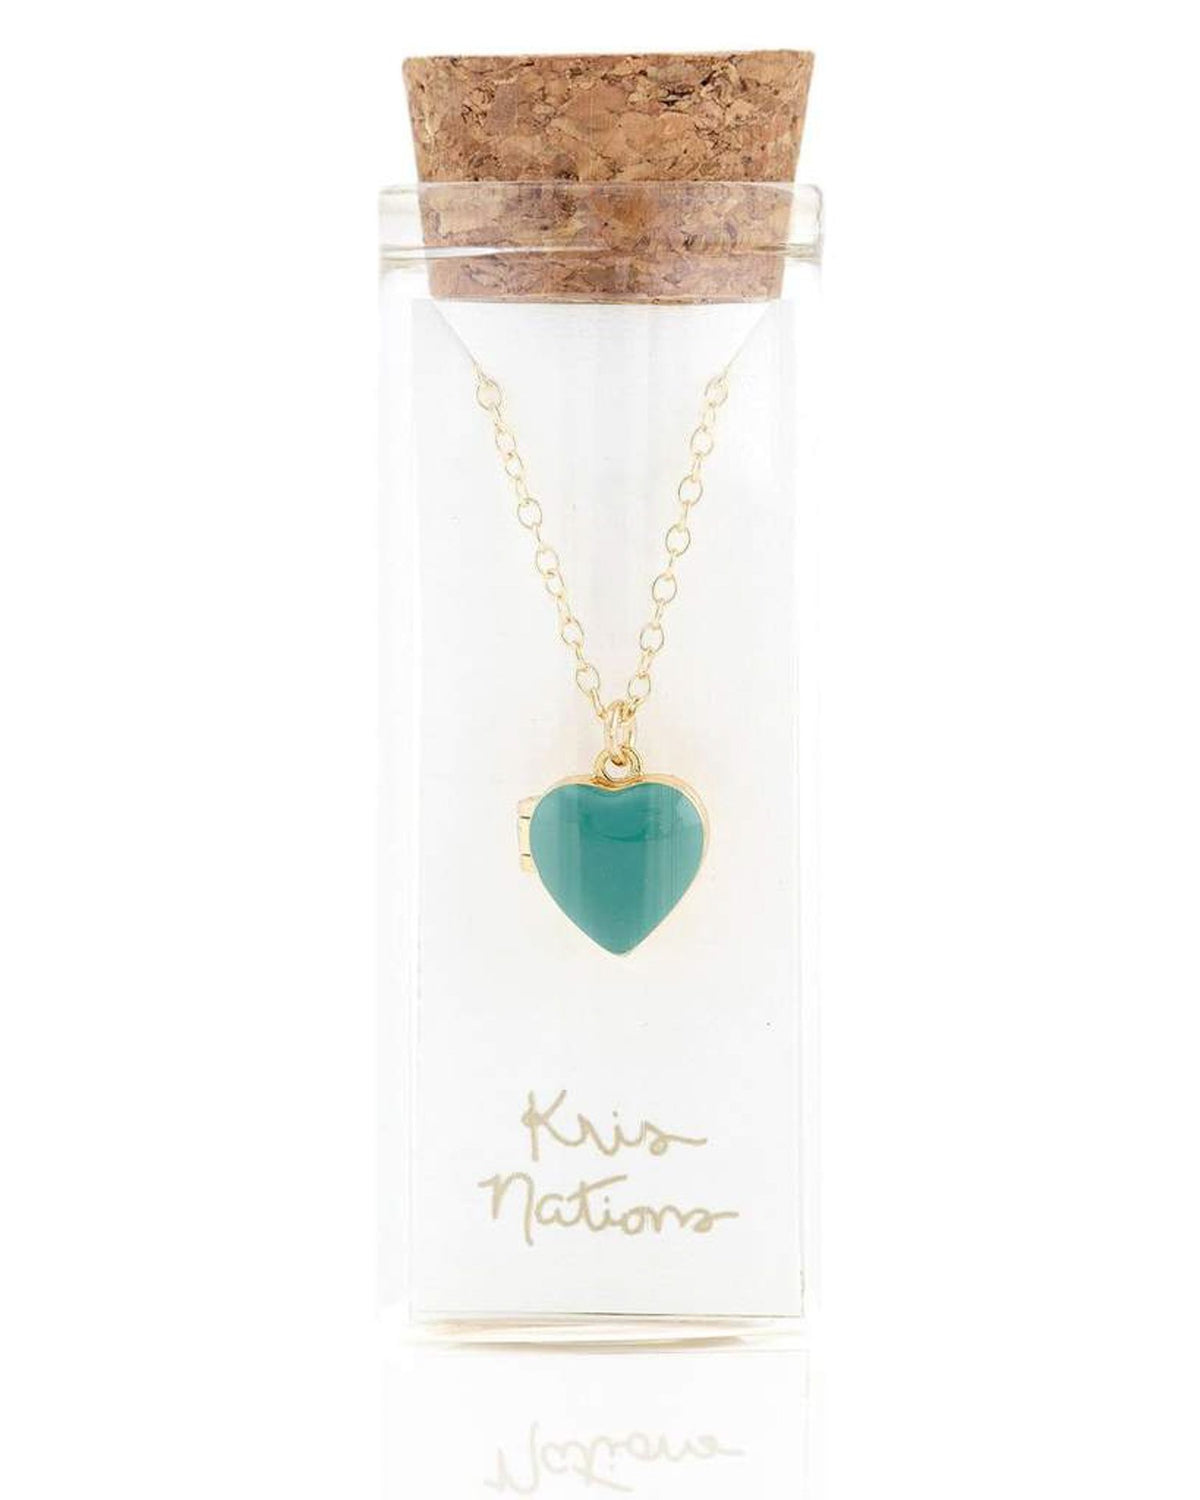 Kris Nations Heart Enamel Locket in Turquoise